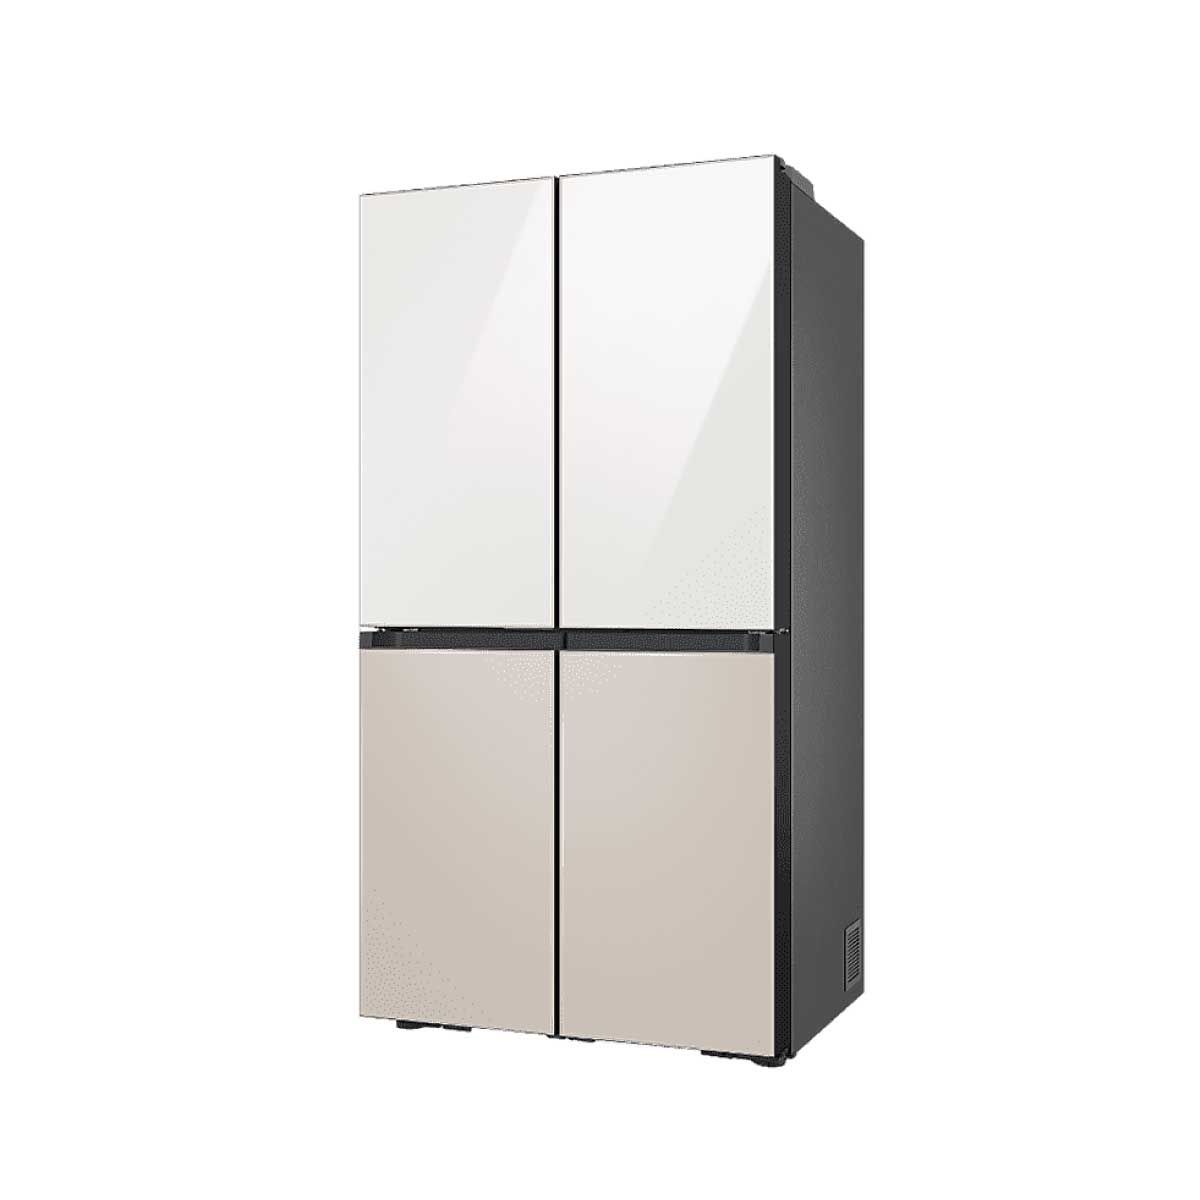 SAMSUNG ตู้เย็น French Door  Bespoke Design 22.7 Q / 649 L รุ่น RF59CB001AP/ST สี ขาว/เบจ